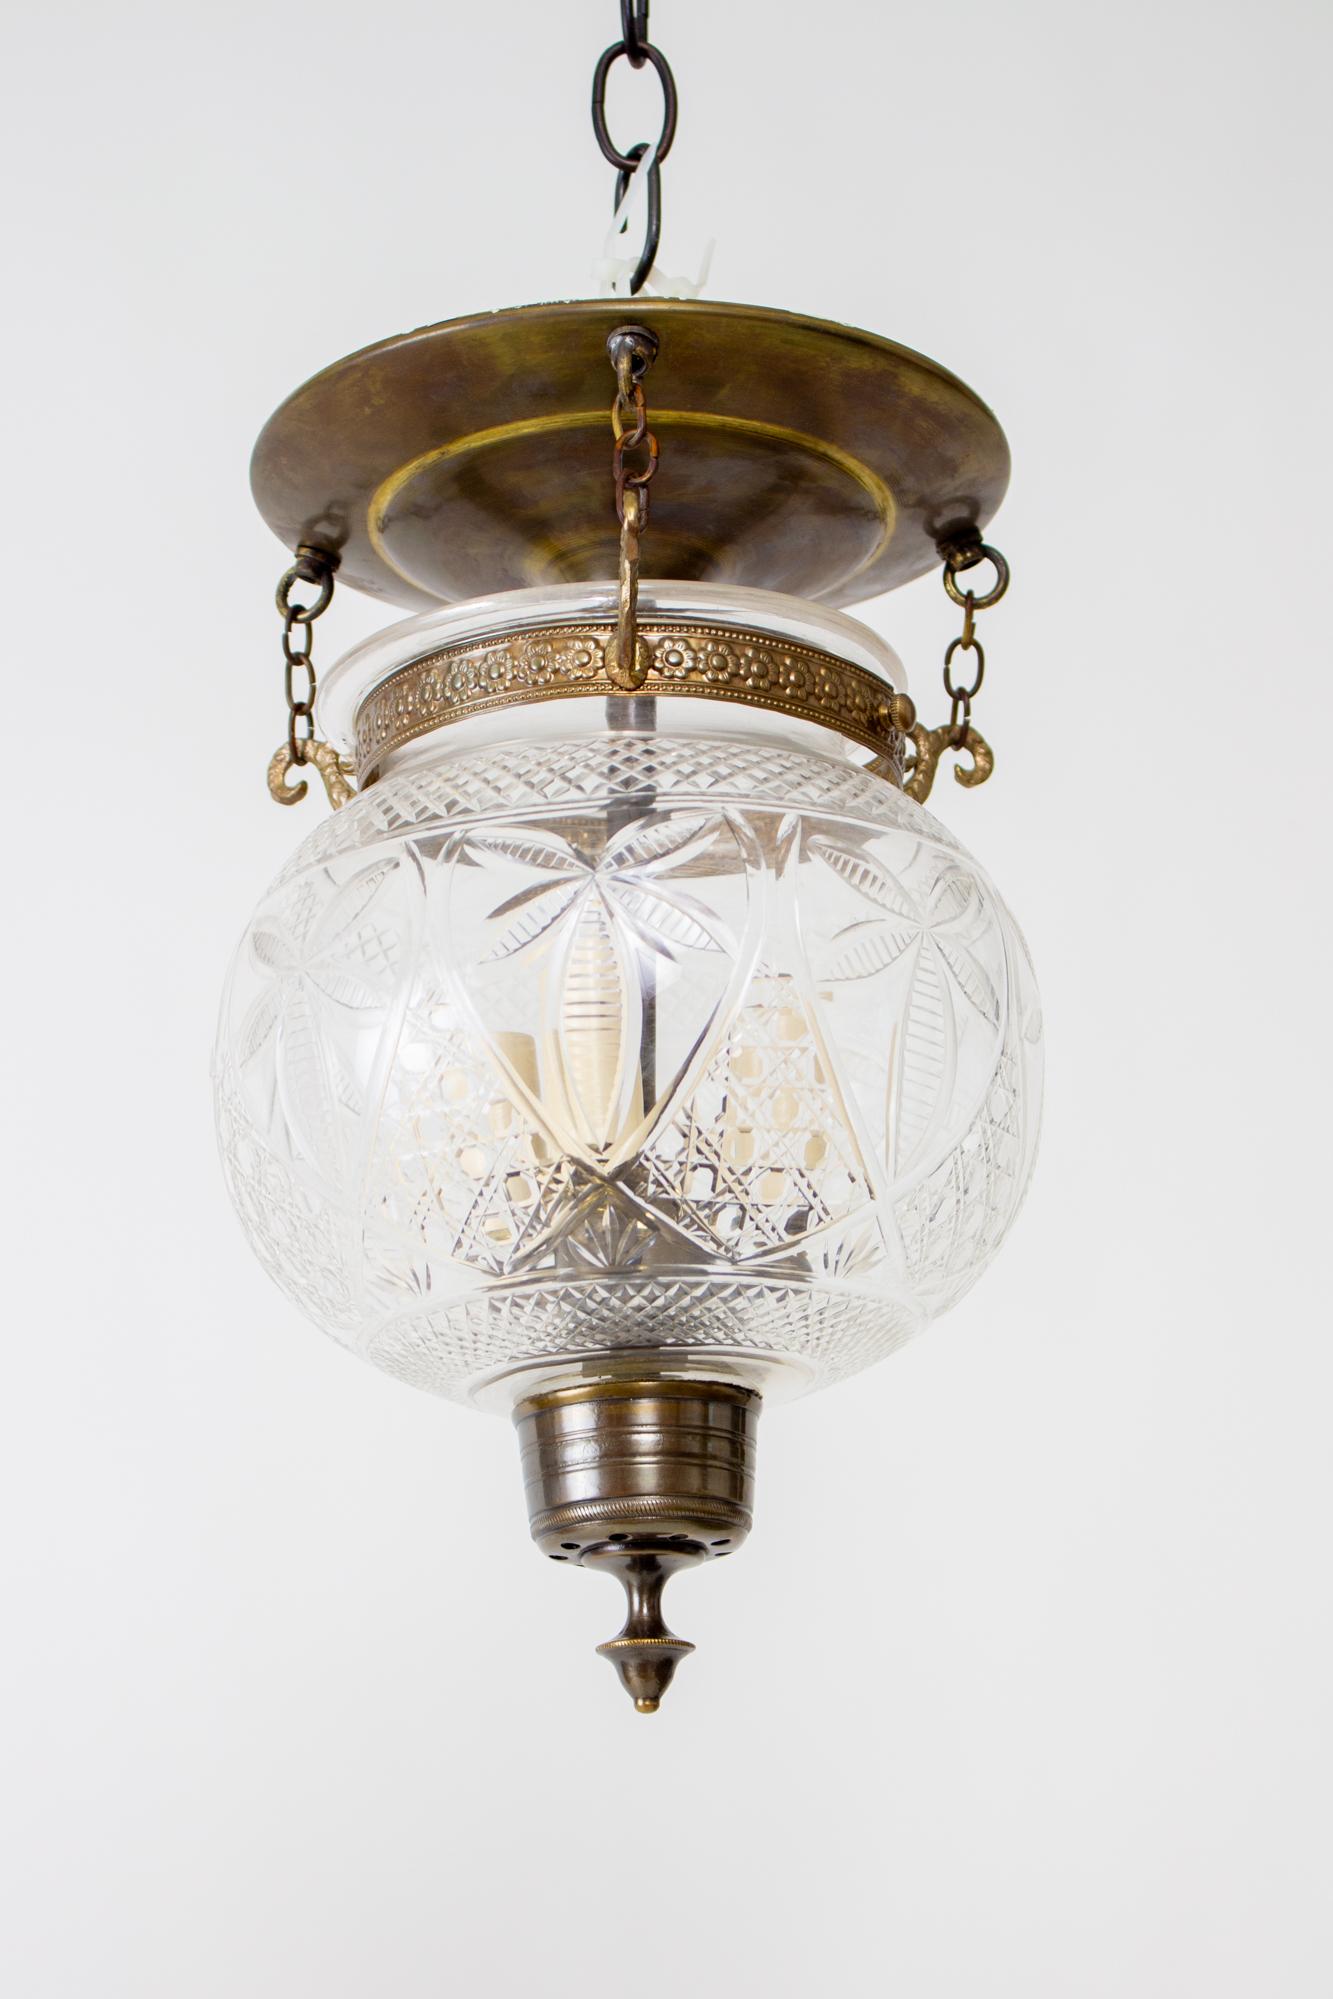 Brass 19th Century Bell Jar Lantern With Cross Hatch Pattern